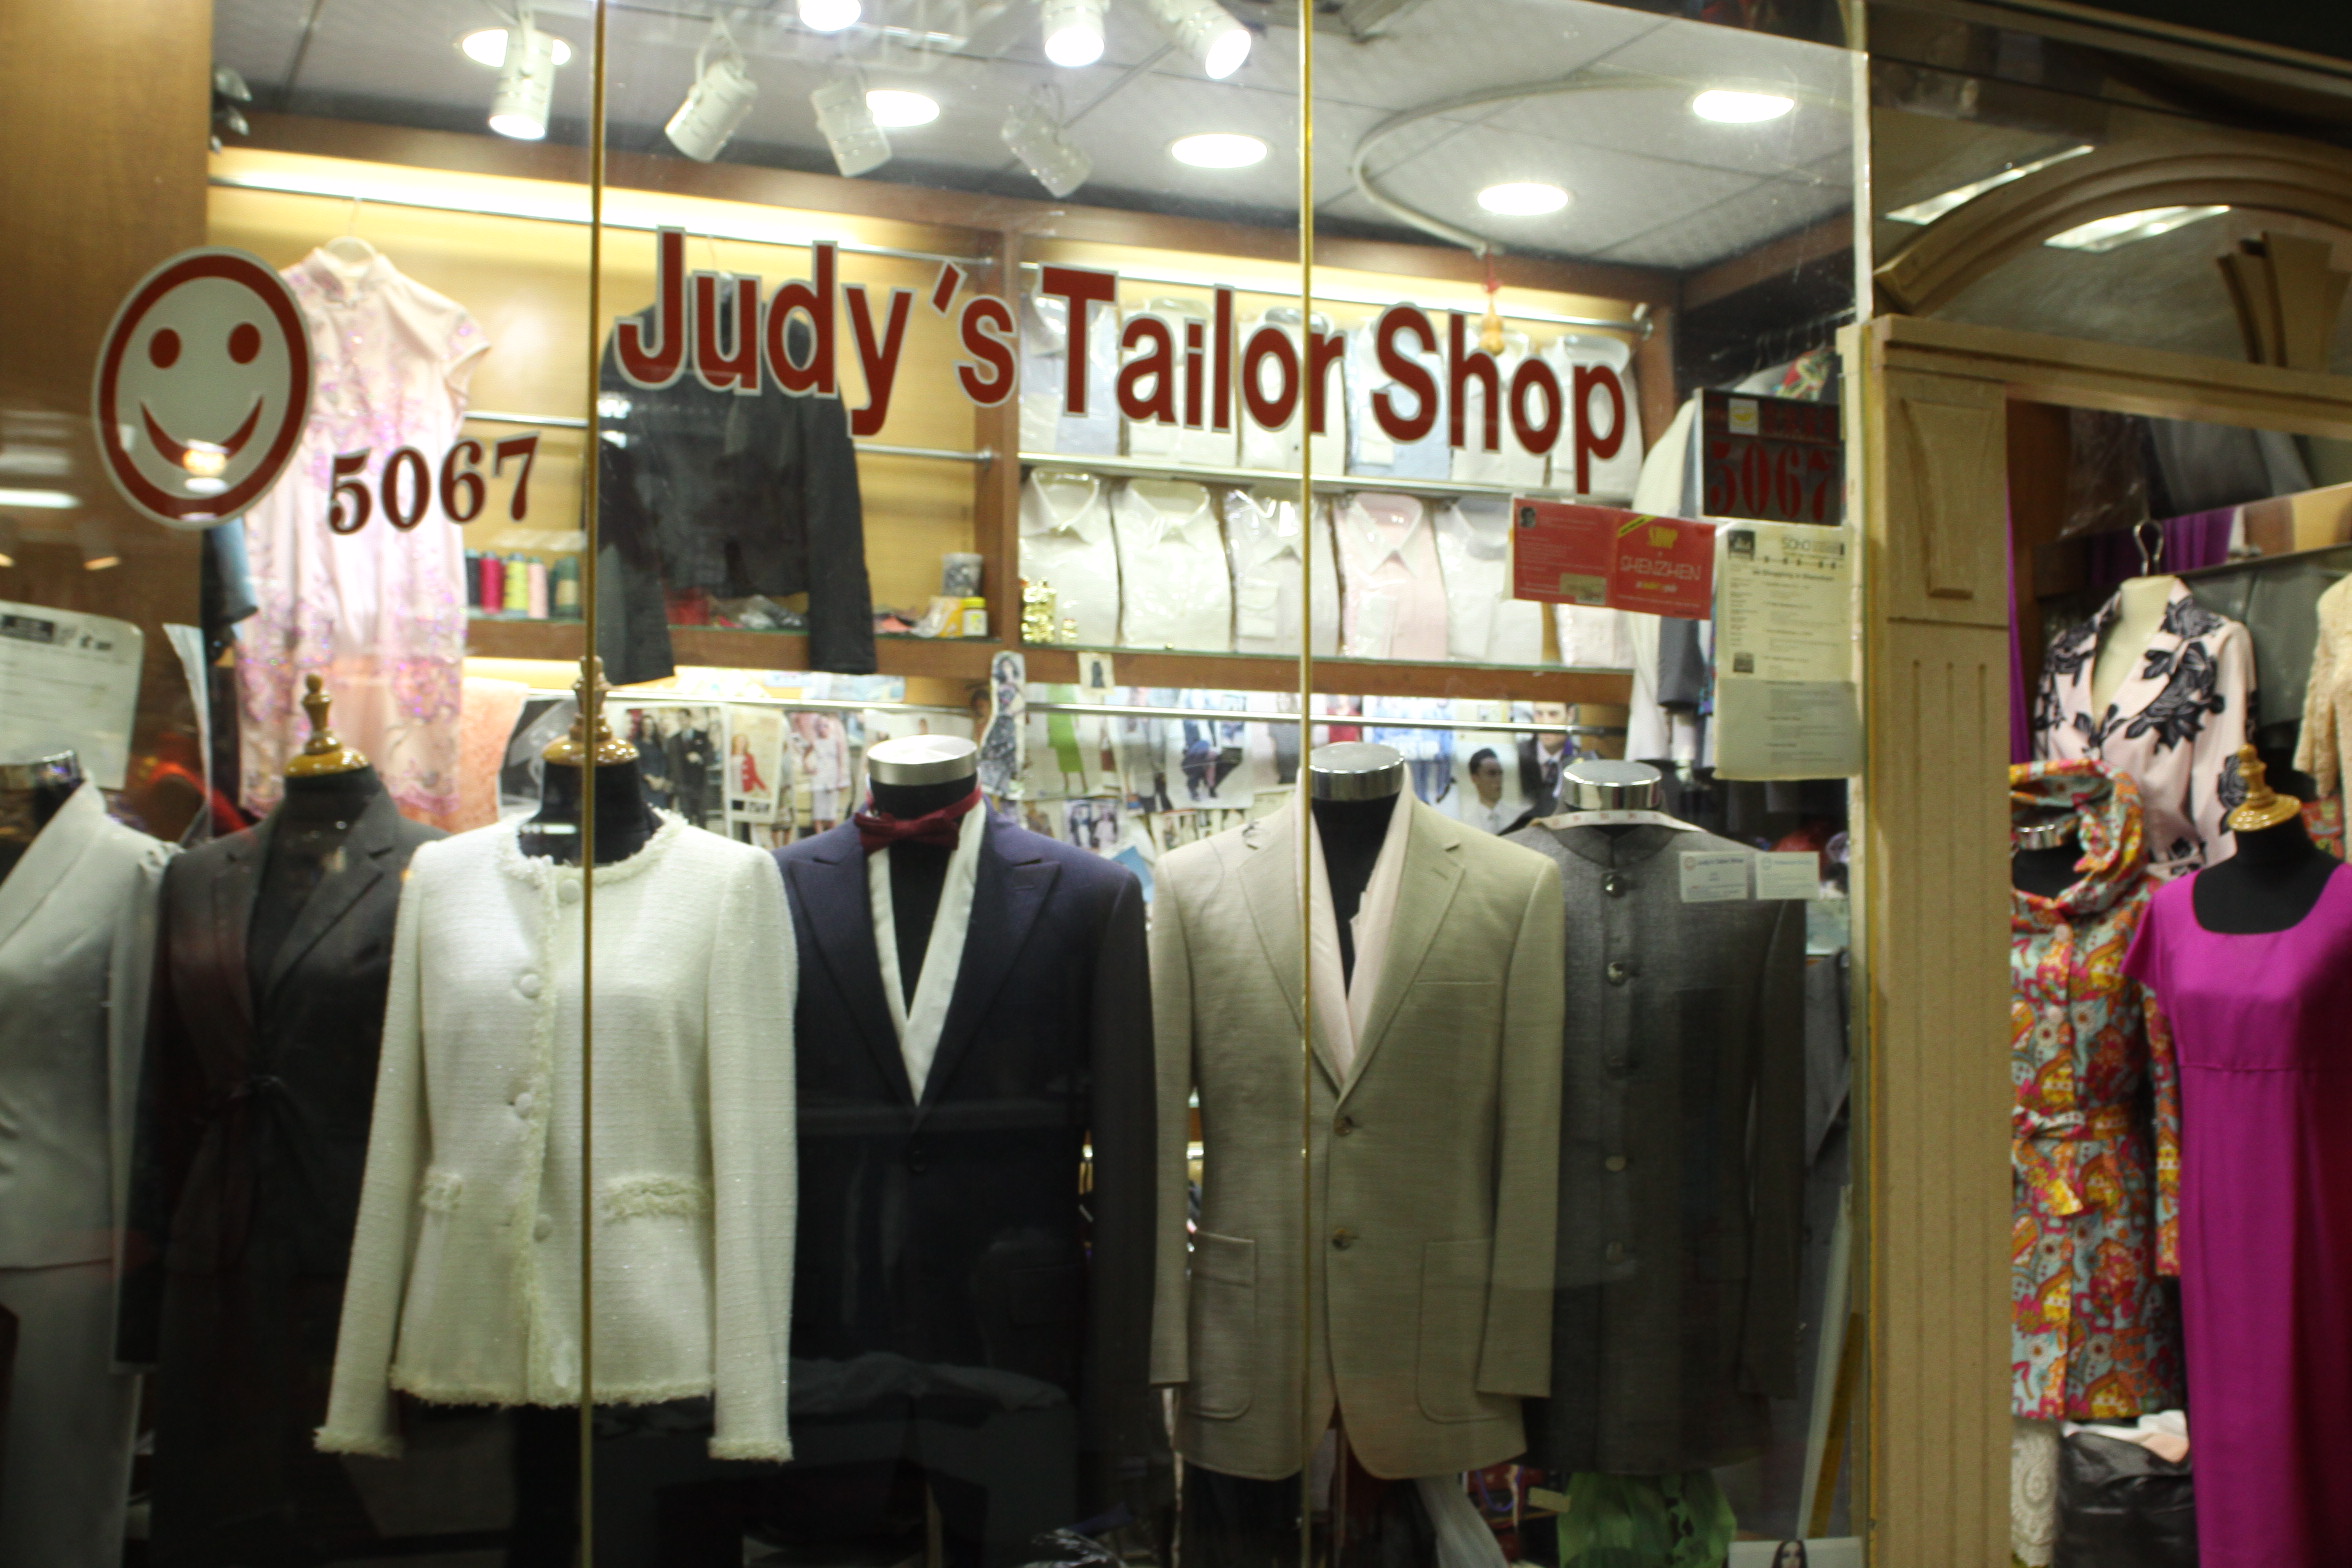 judy's tailor shop 5067